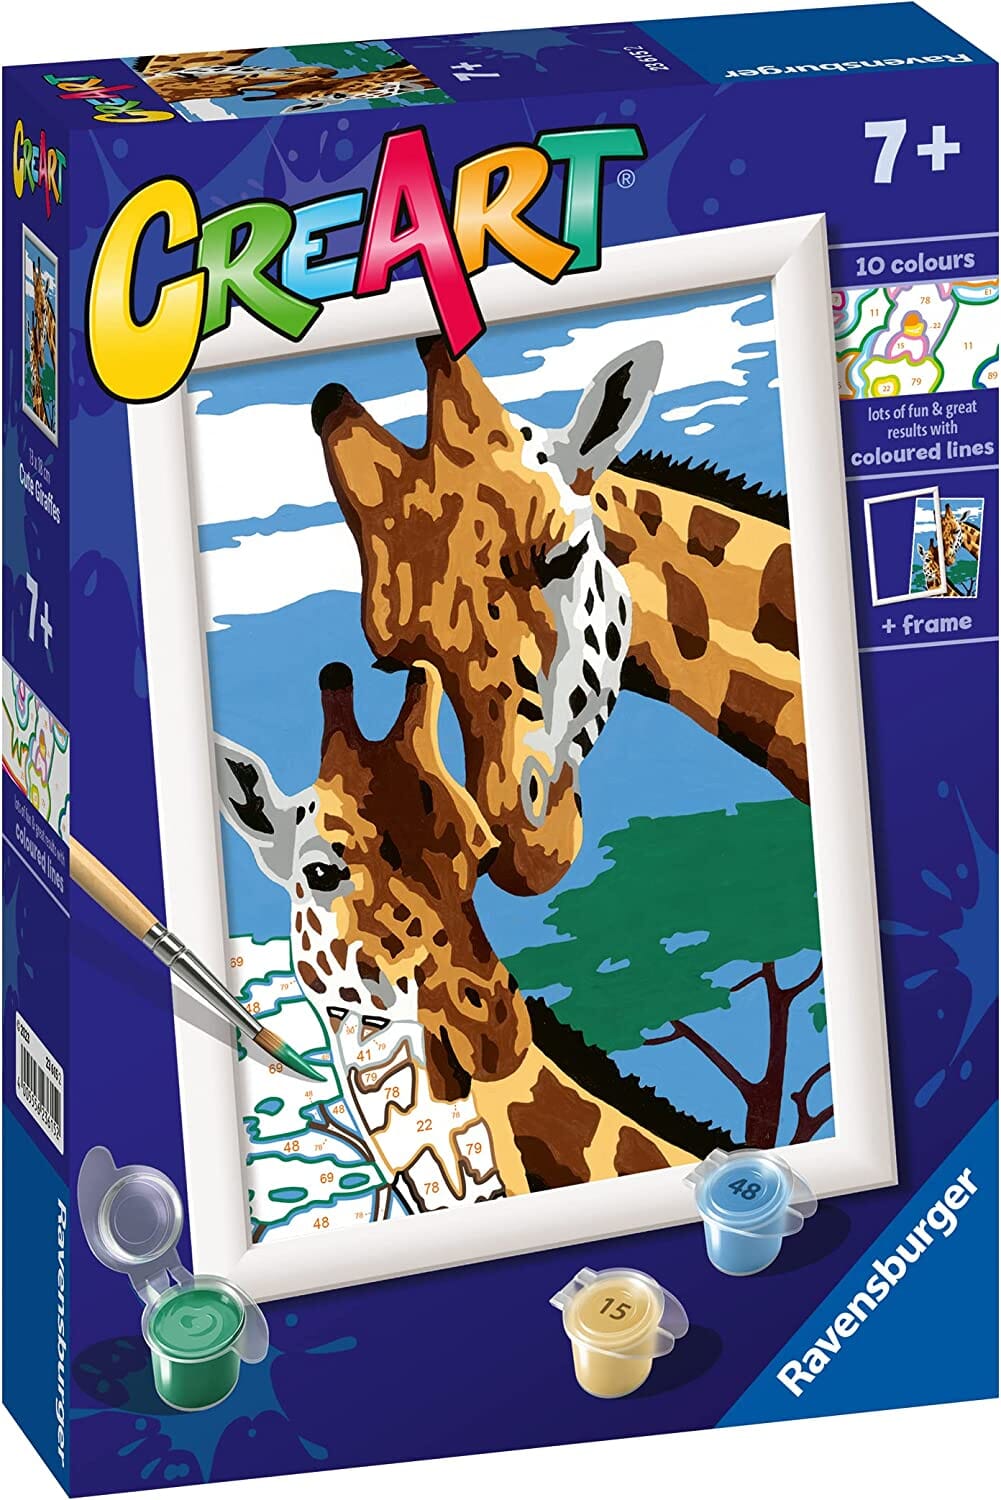 Creart Serie E Classic Giraffe toysvaldichiana.it 